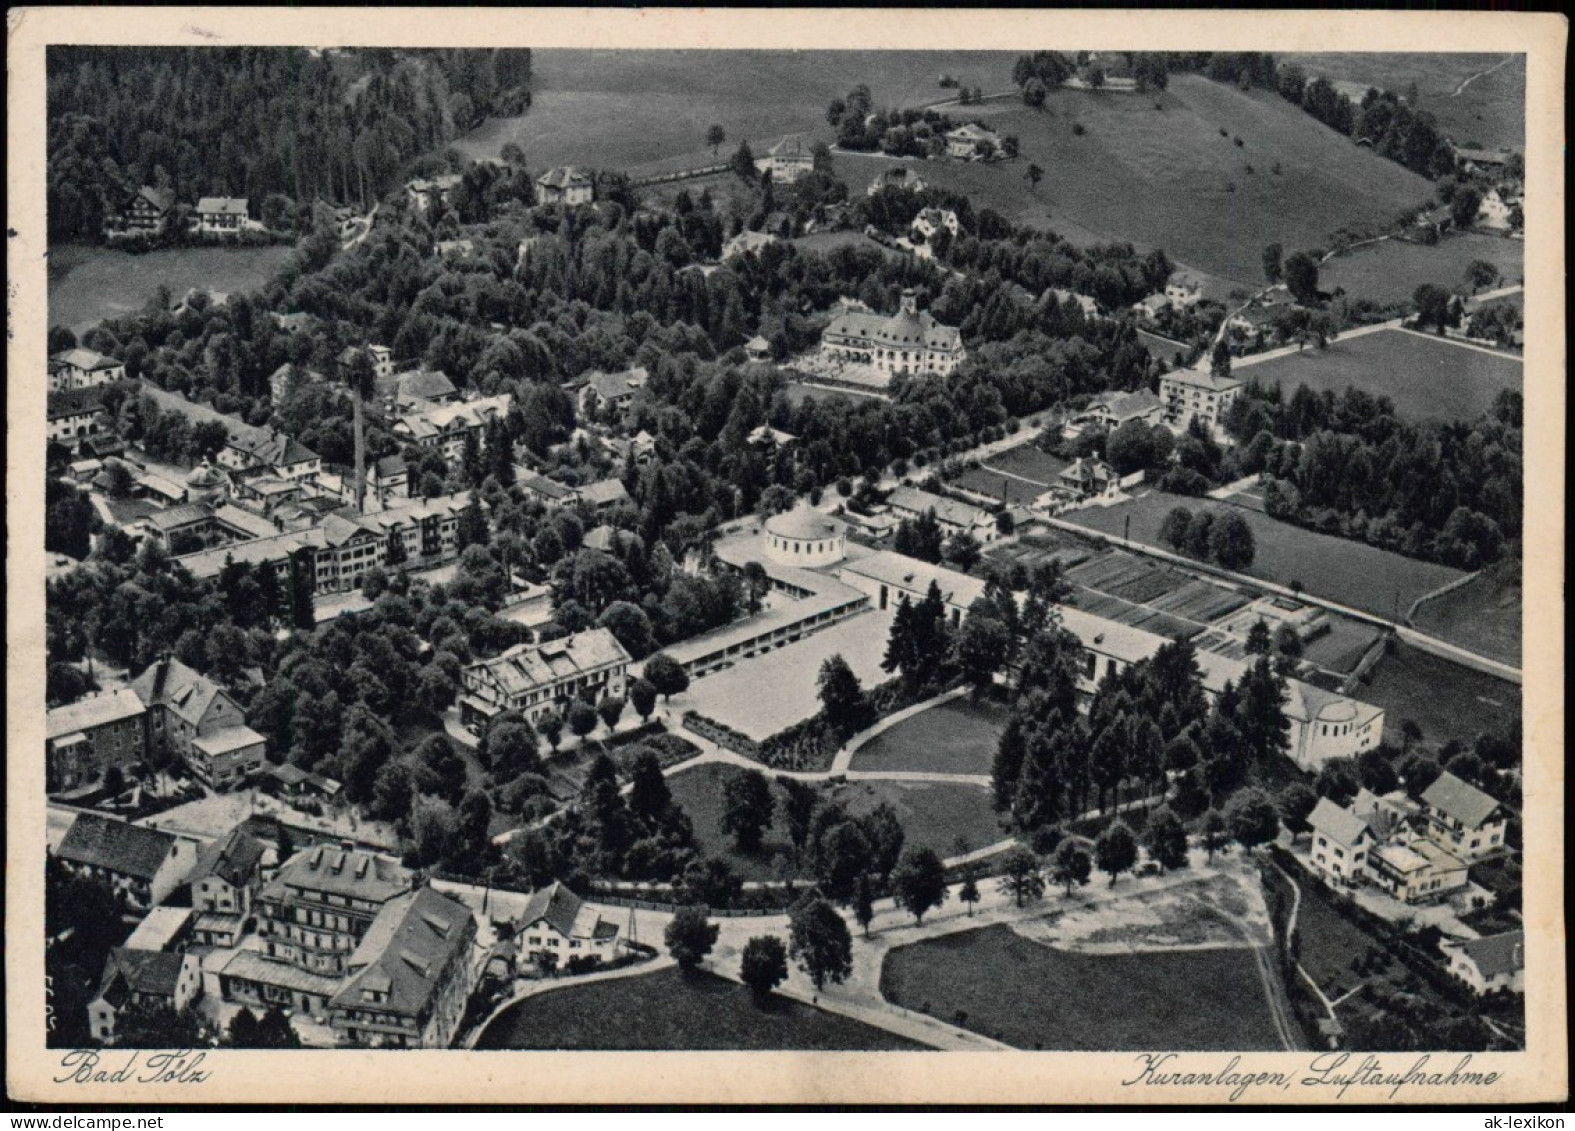 Ansichtskarte Bad Tölz Luftbild Kuranlagen, Luftaufnahme 1937 - Bad Tölz